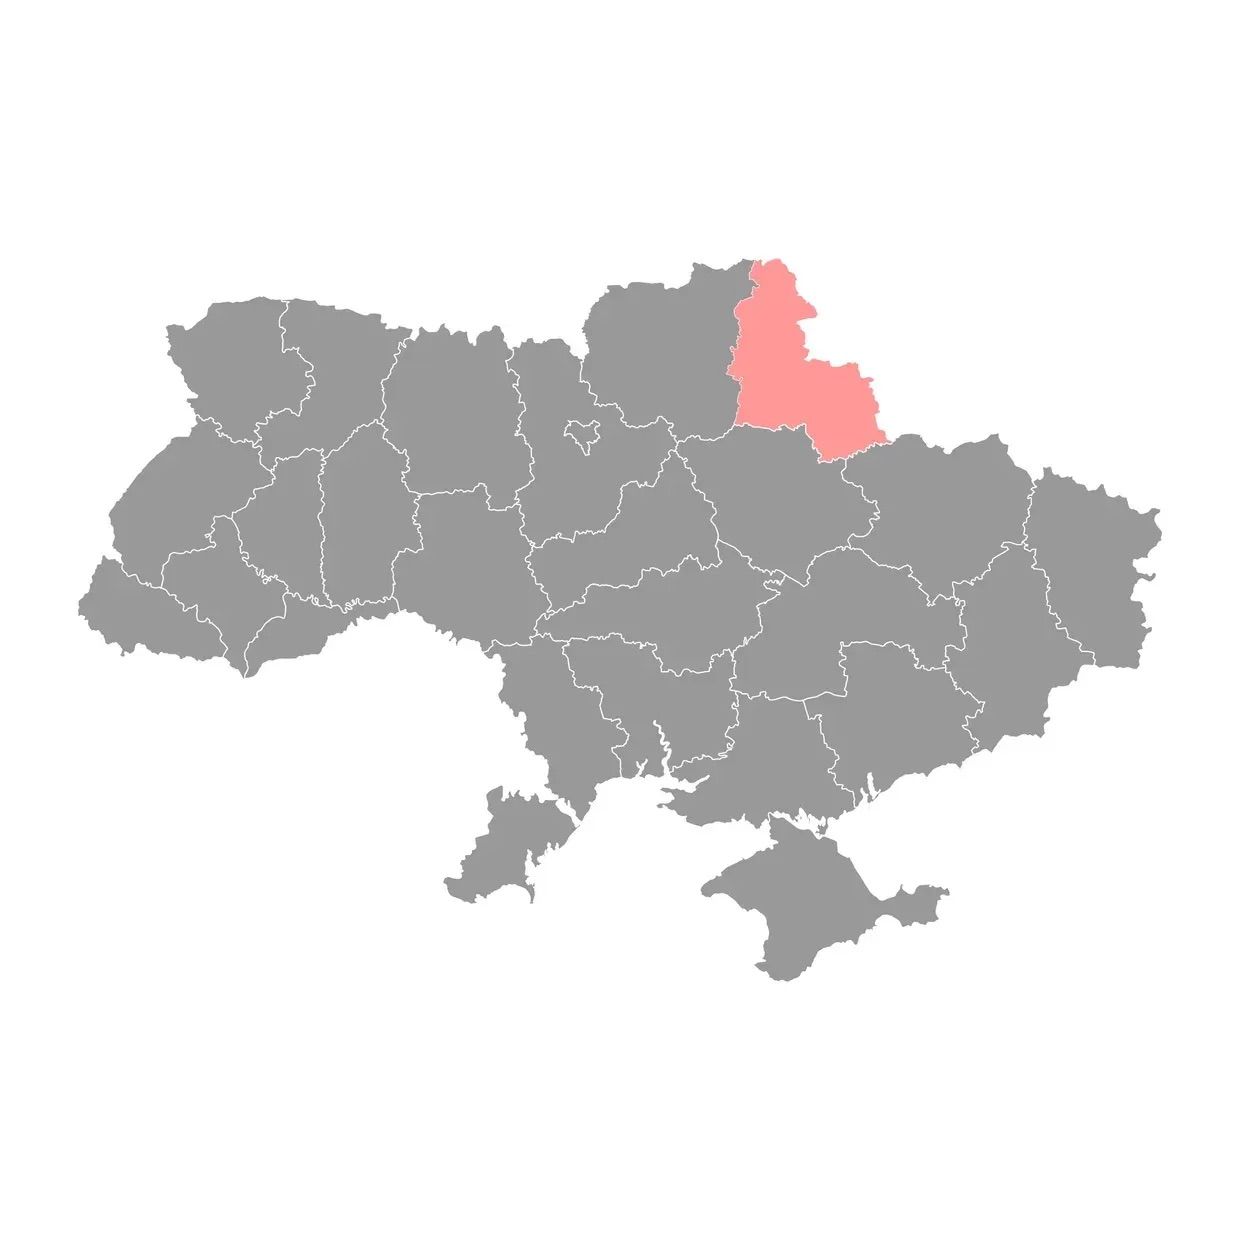 Russia attacks 7 communities in Sumy Oblast